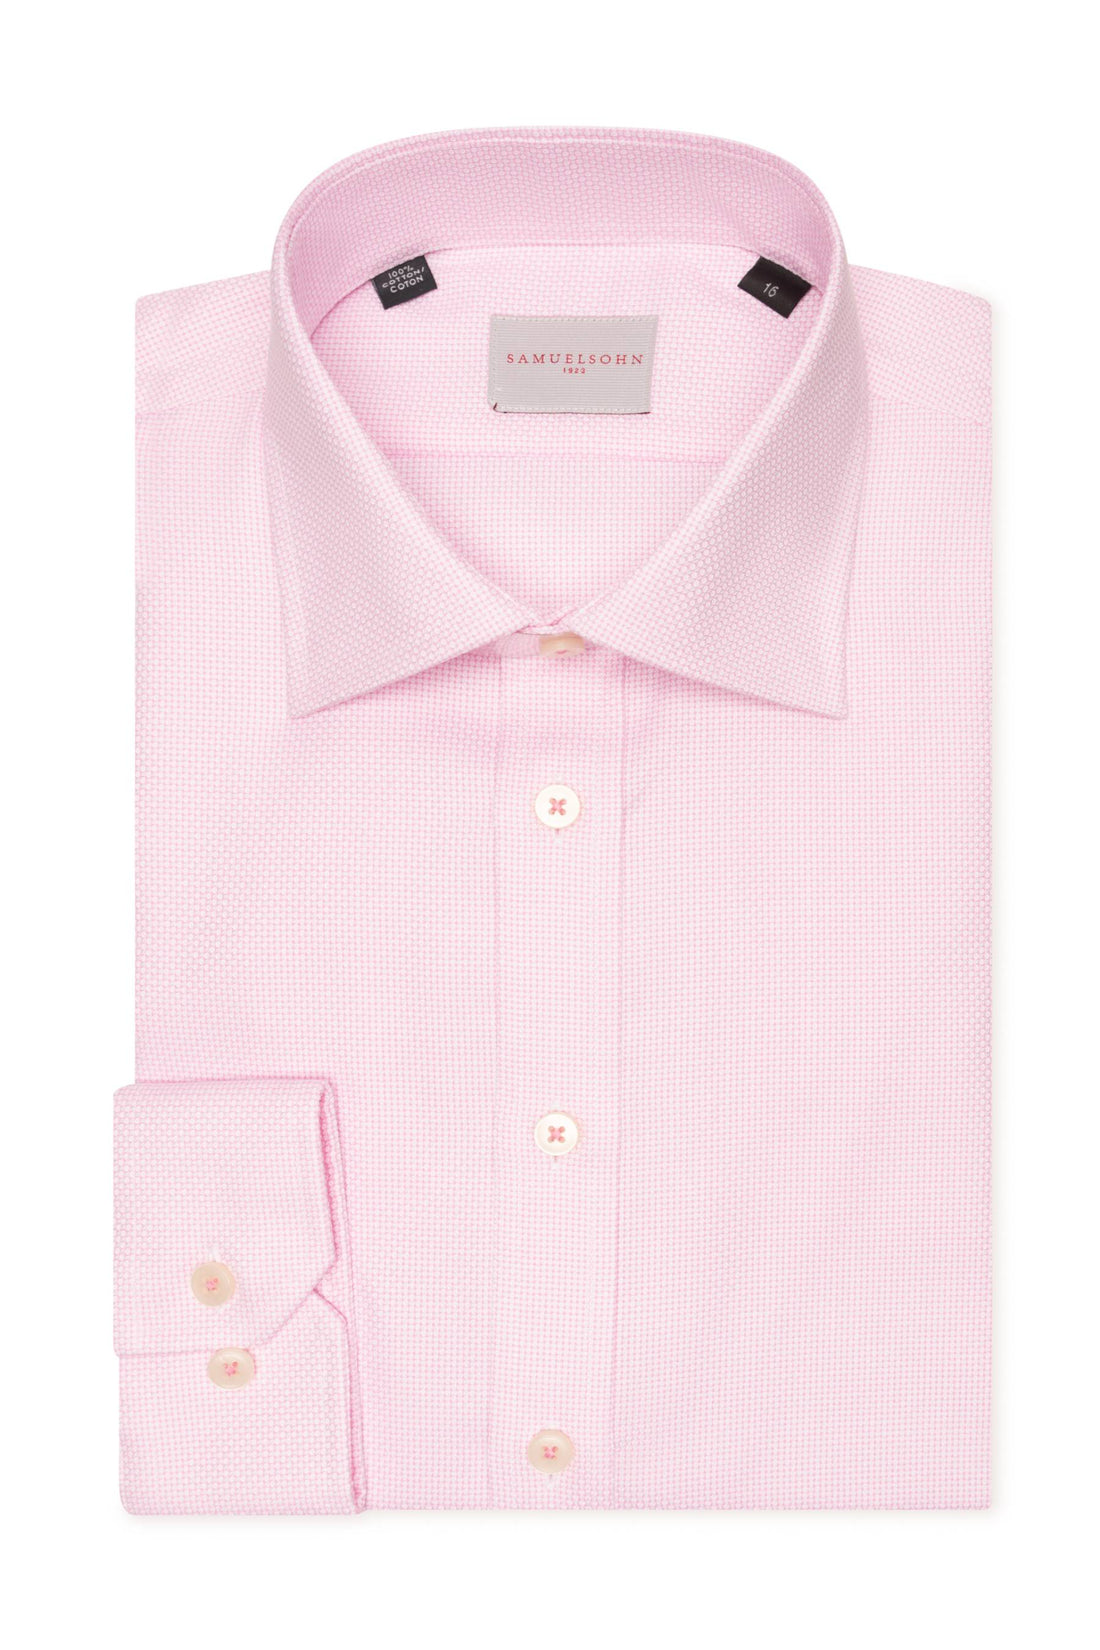 Samuelsohn Pink Dobby Contemporary Fit Easy Care Shirt